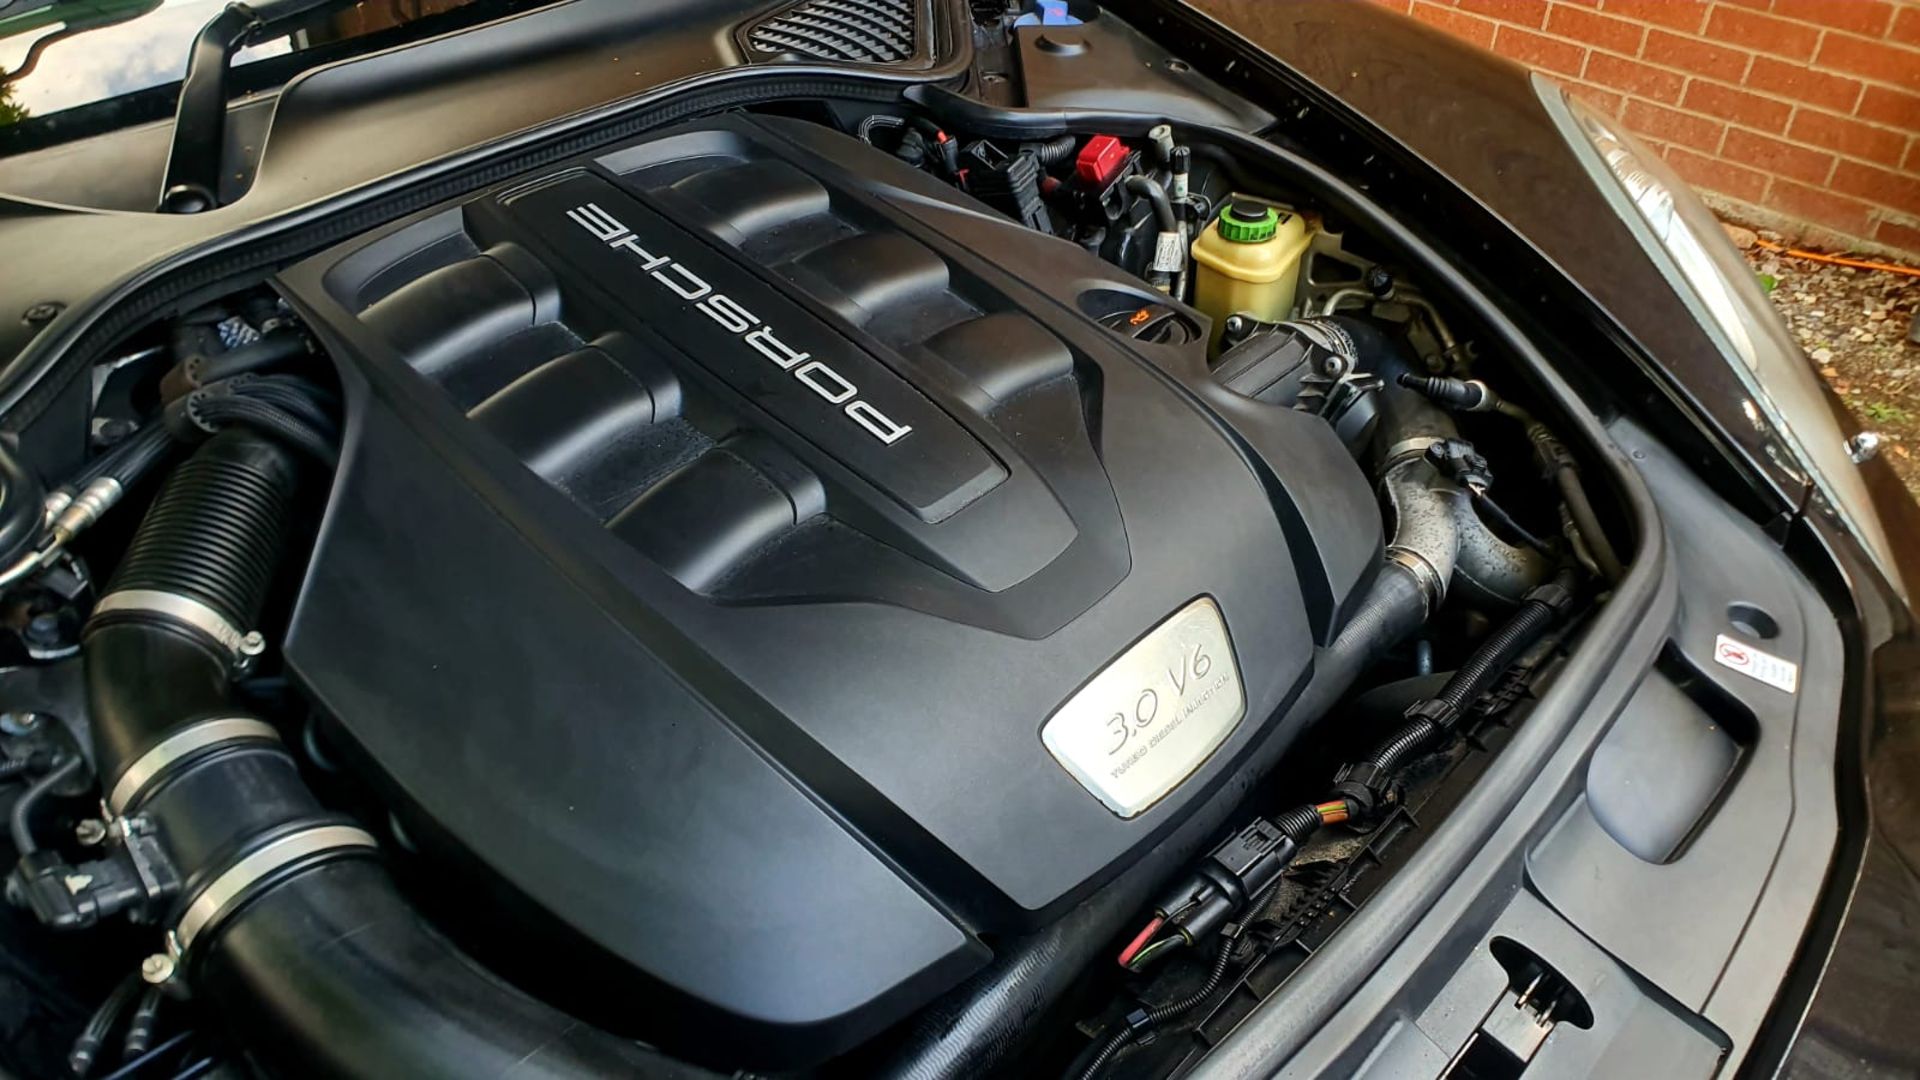 2012/61 REG PORSCHE PANAMERA 3.0 V6 TURBO DIESEL INJECTION ENGINE, BLACK, AUTOMATIC COUPE *NO VAT* - Image 34 of 59